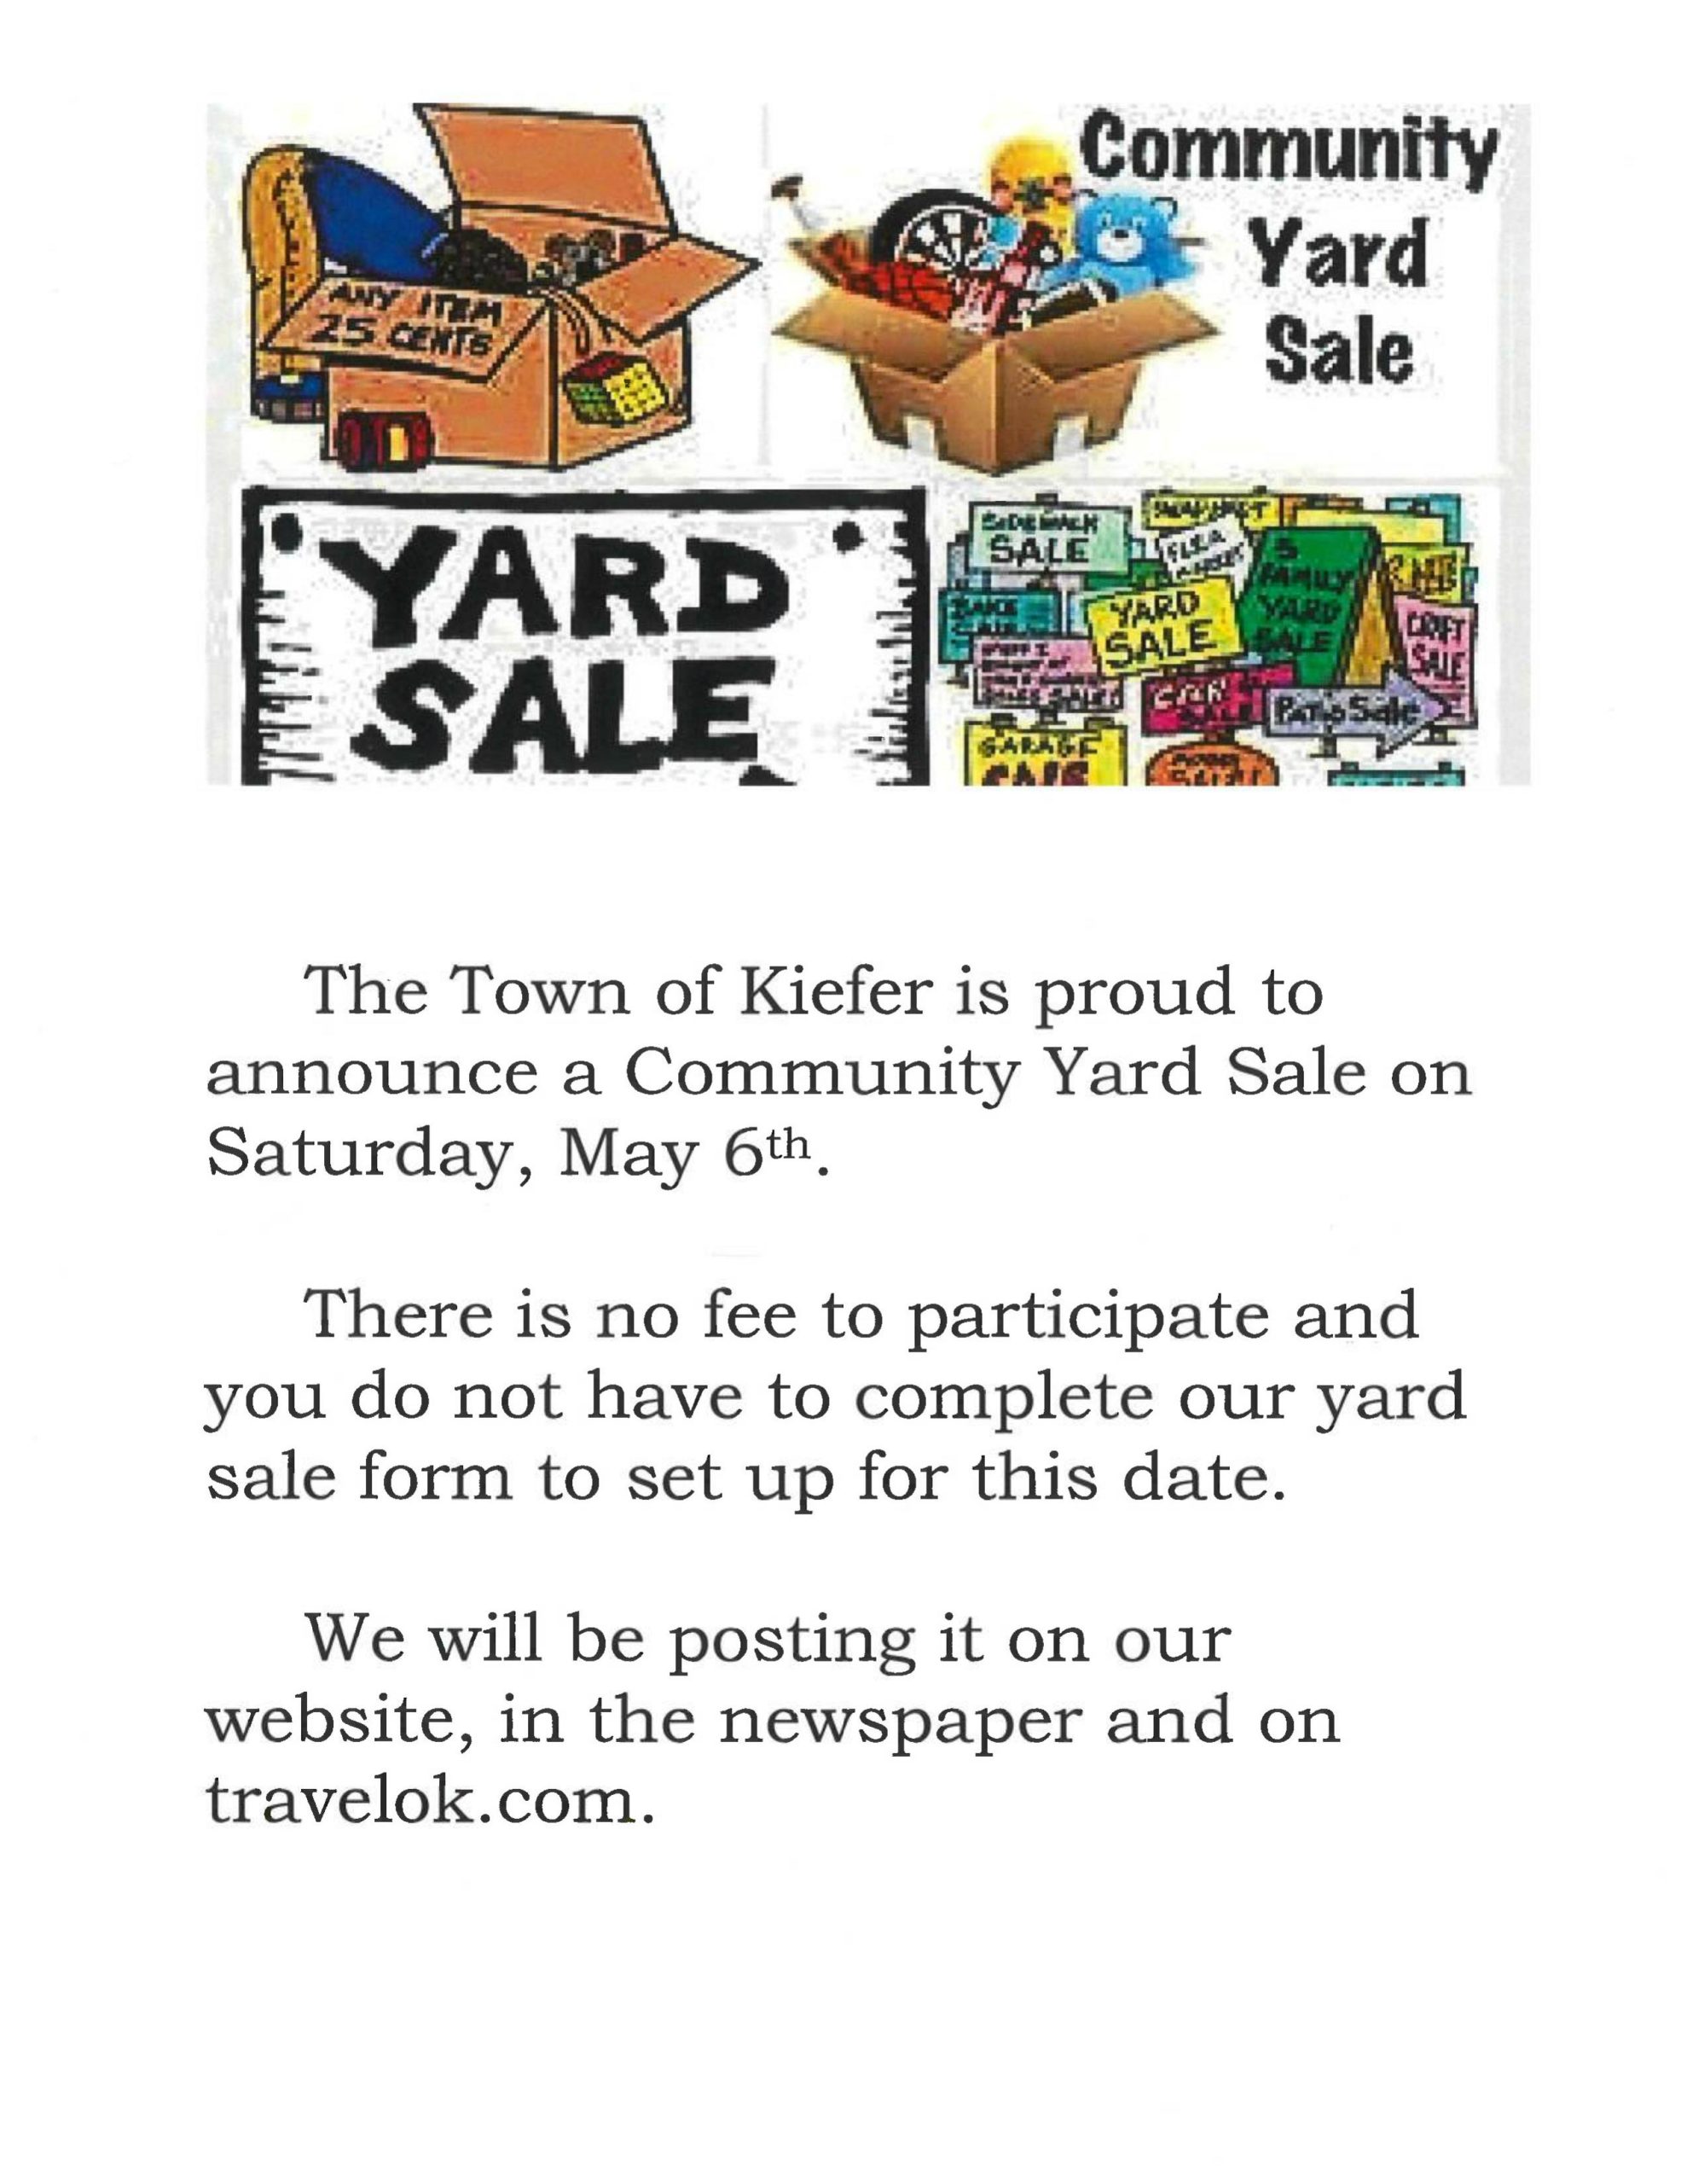 Kiefer Community Yard Sale